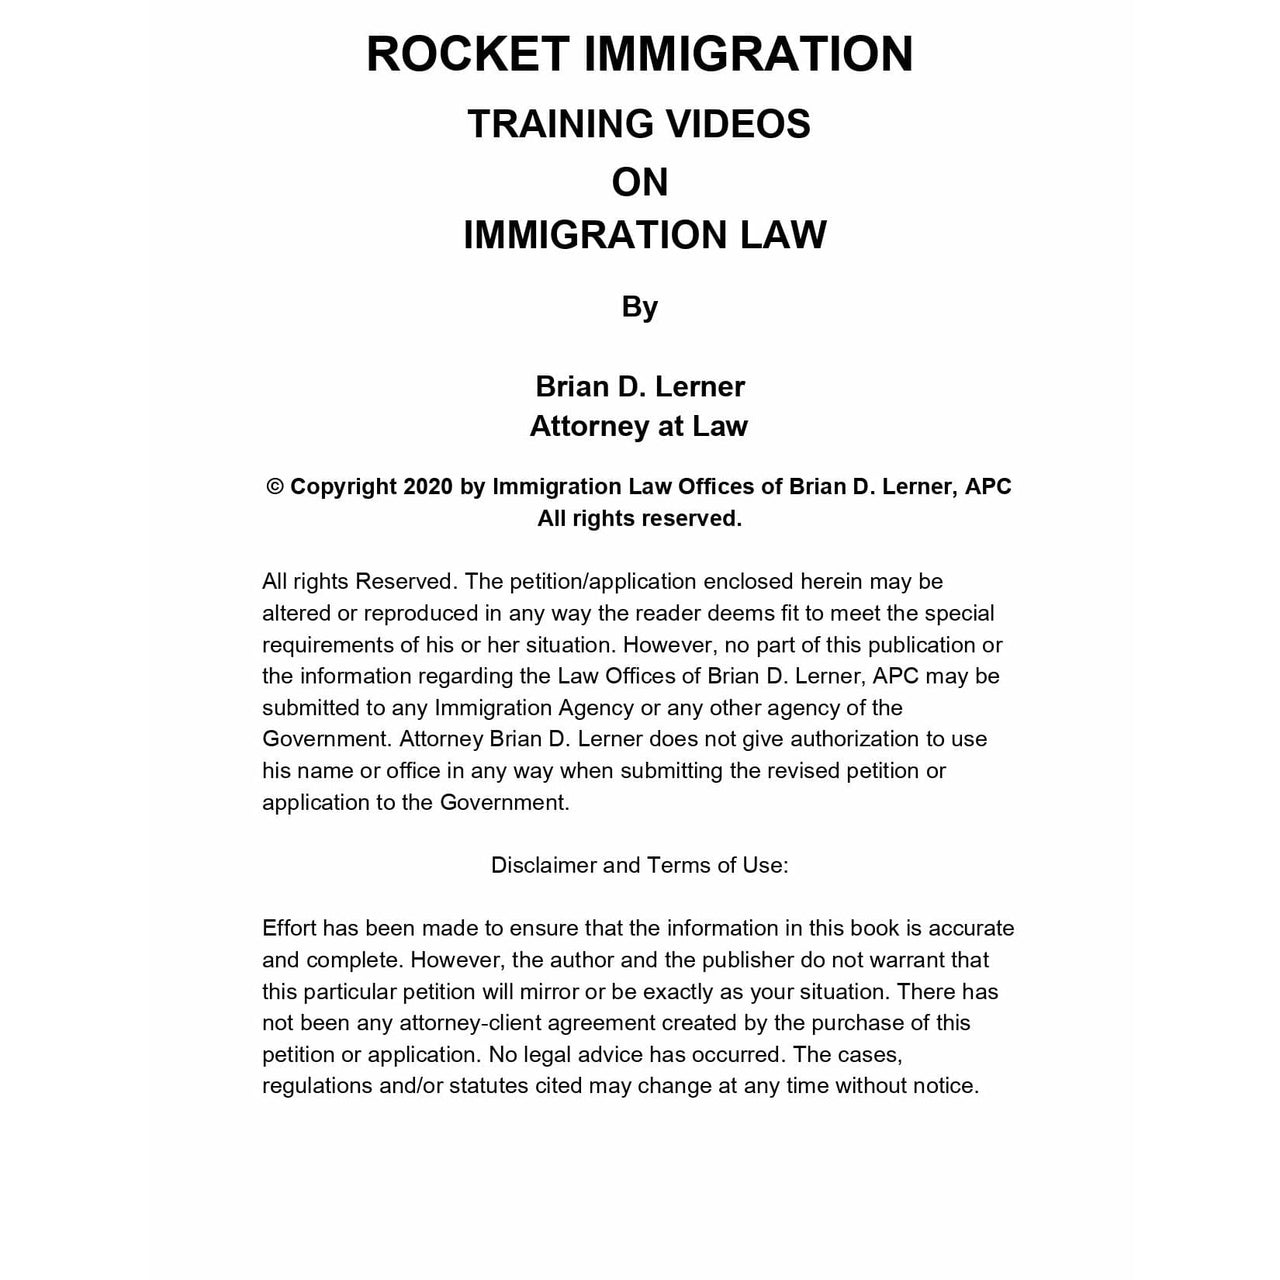 U-Visa Crime Training Course Access Packet - Rocket Immigration Petitions